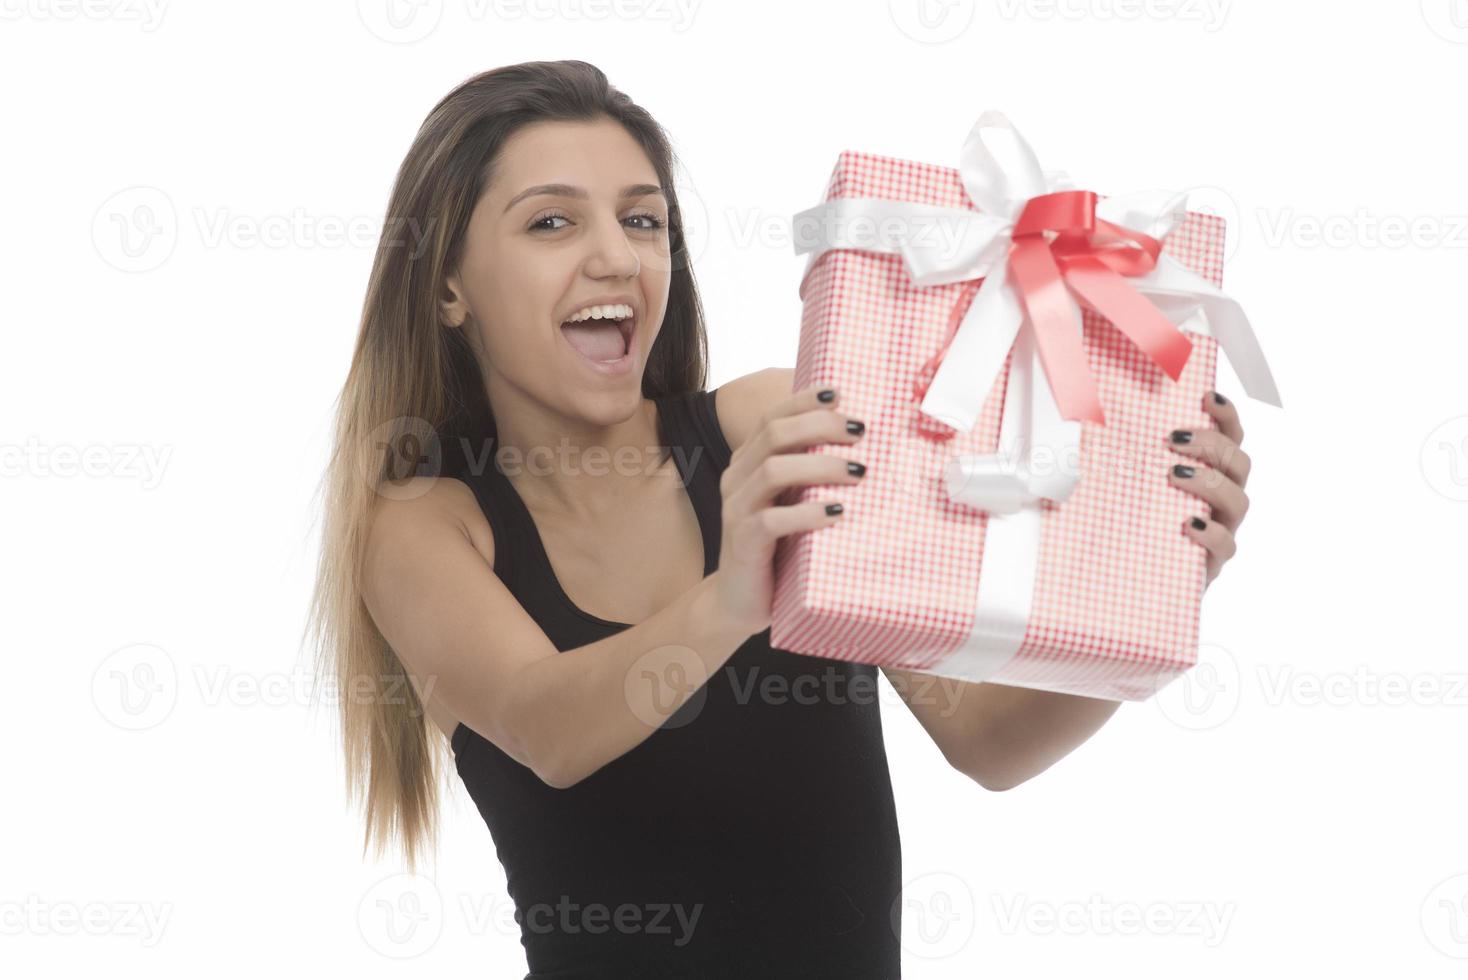 sorriso de mulher bonita feliz e abraçando a caixa de presente isolada no fundo branco foto